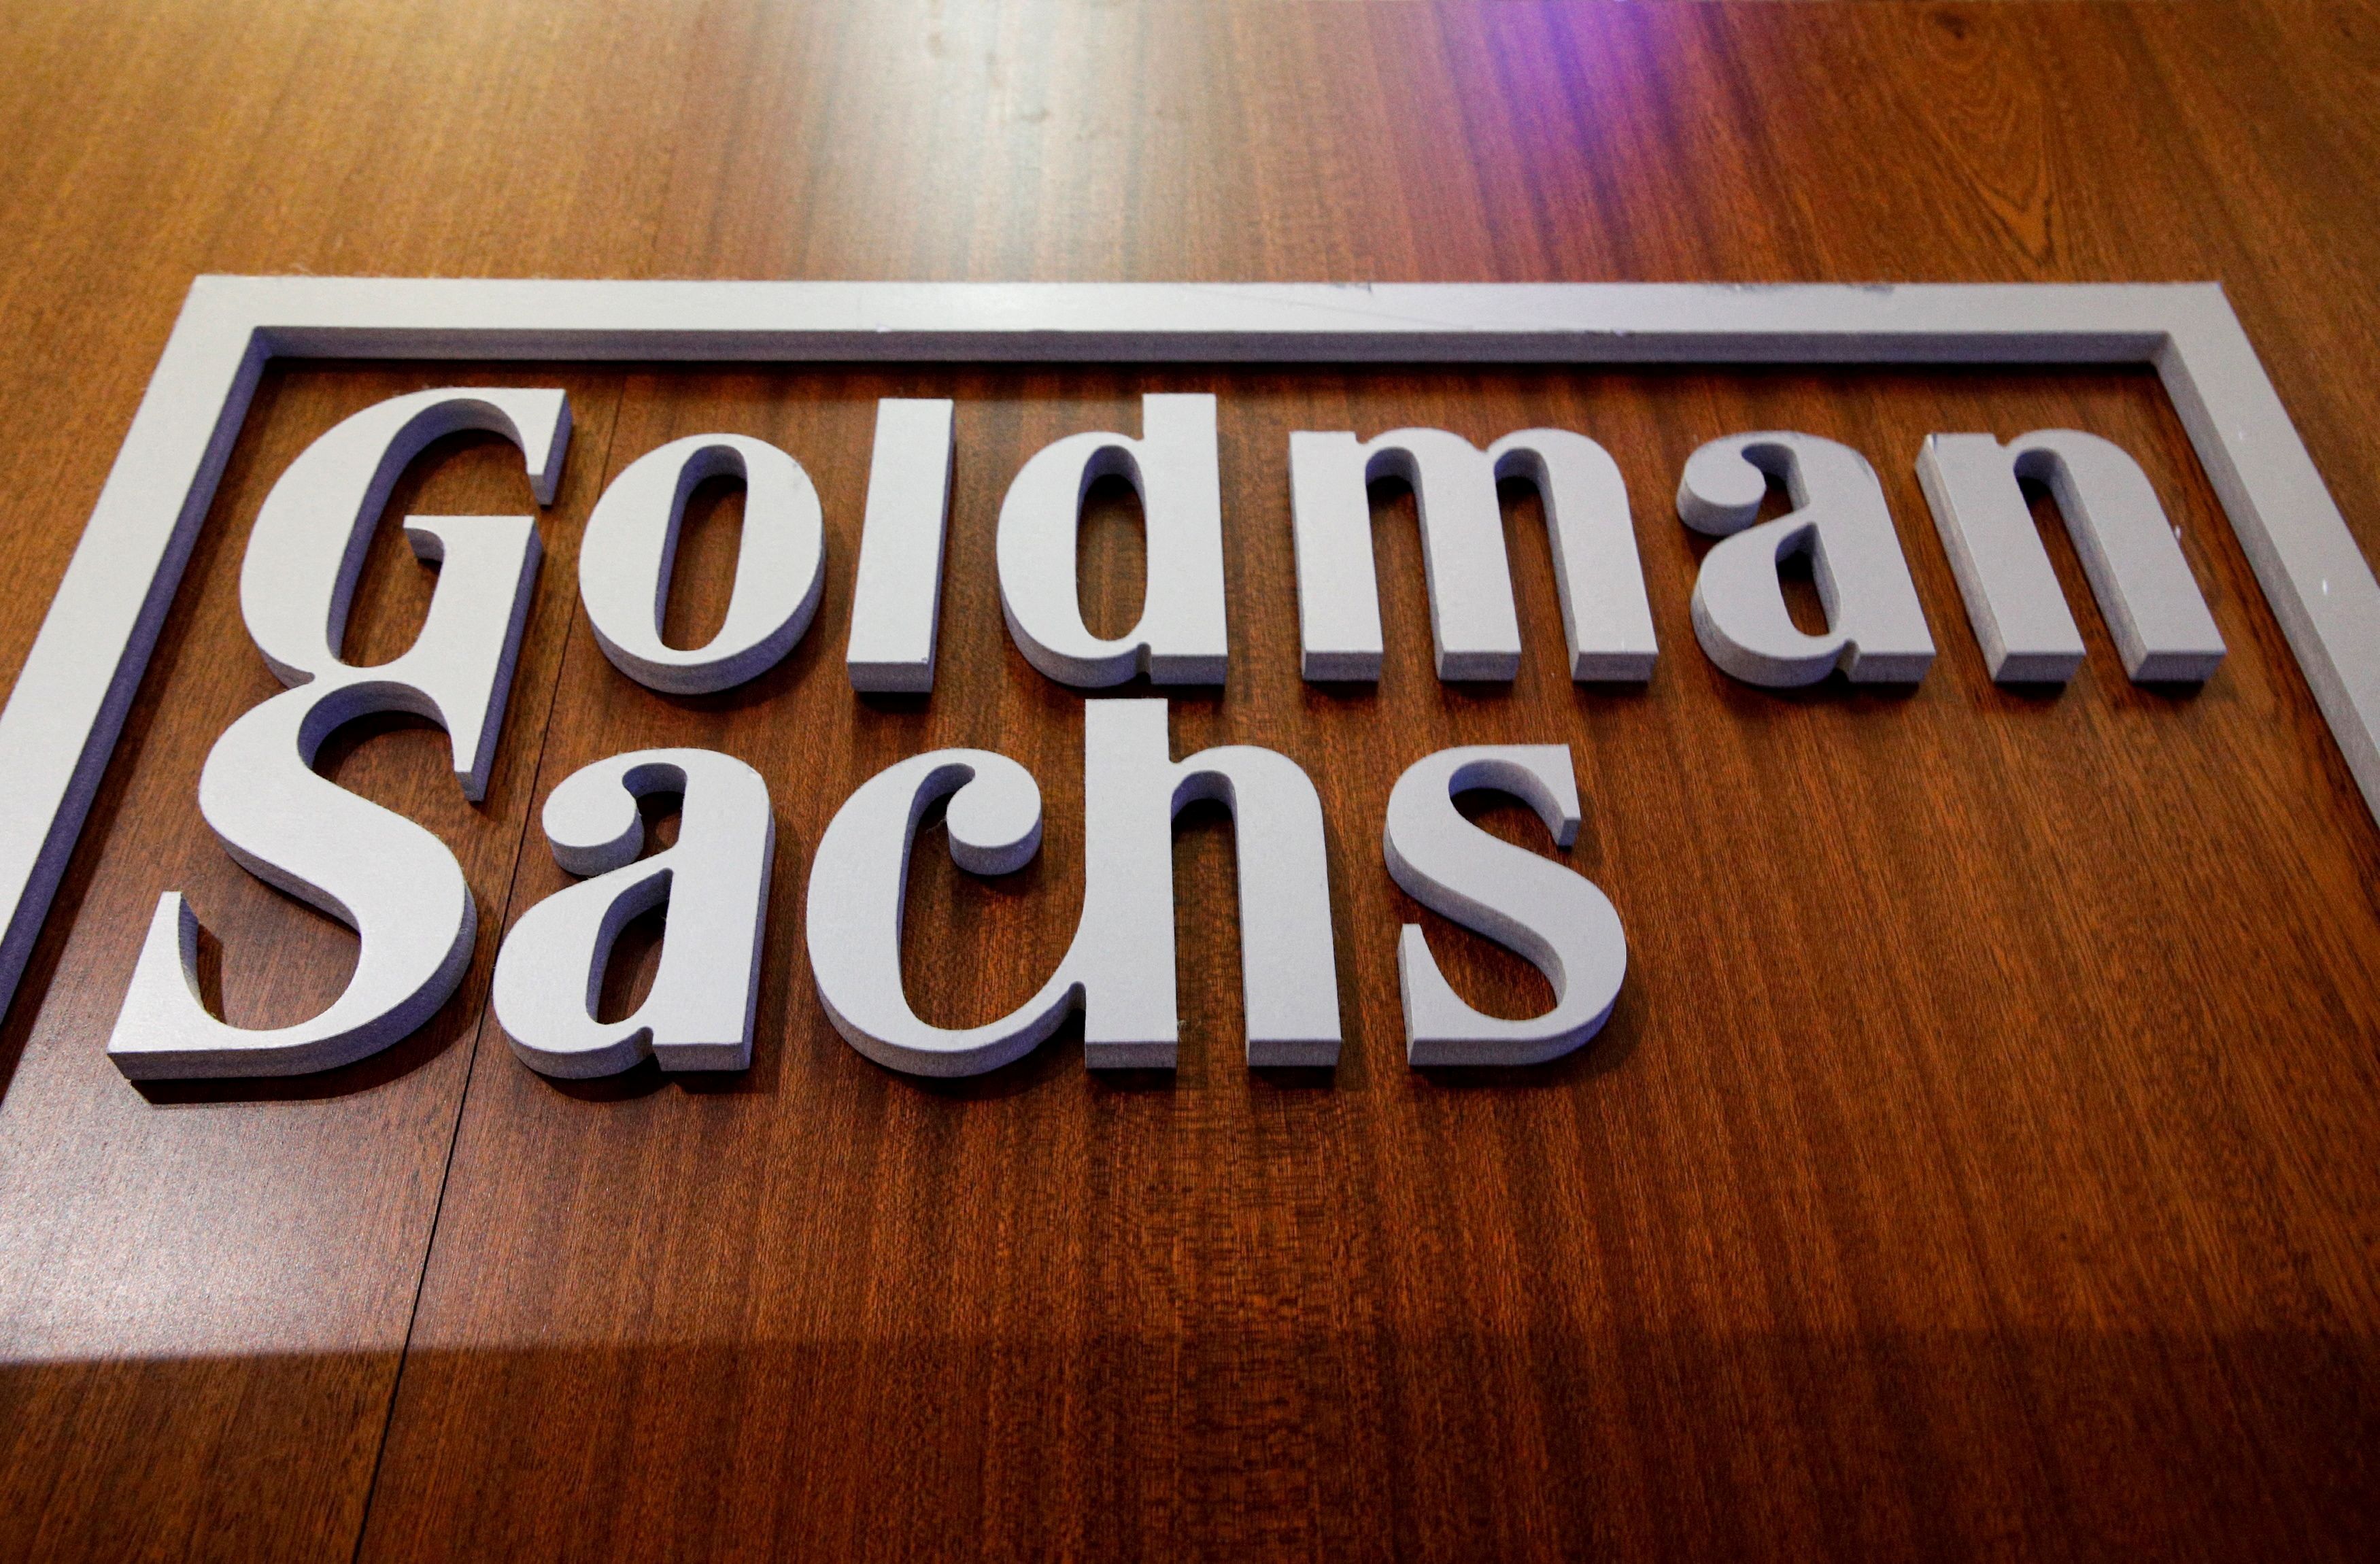 The Goldman Sachs company